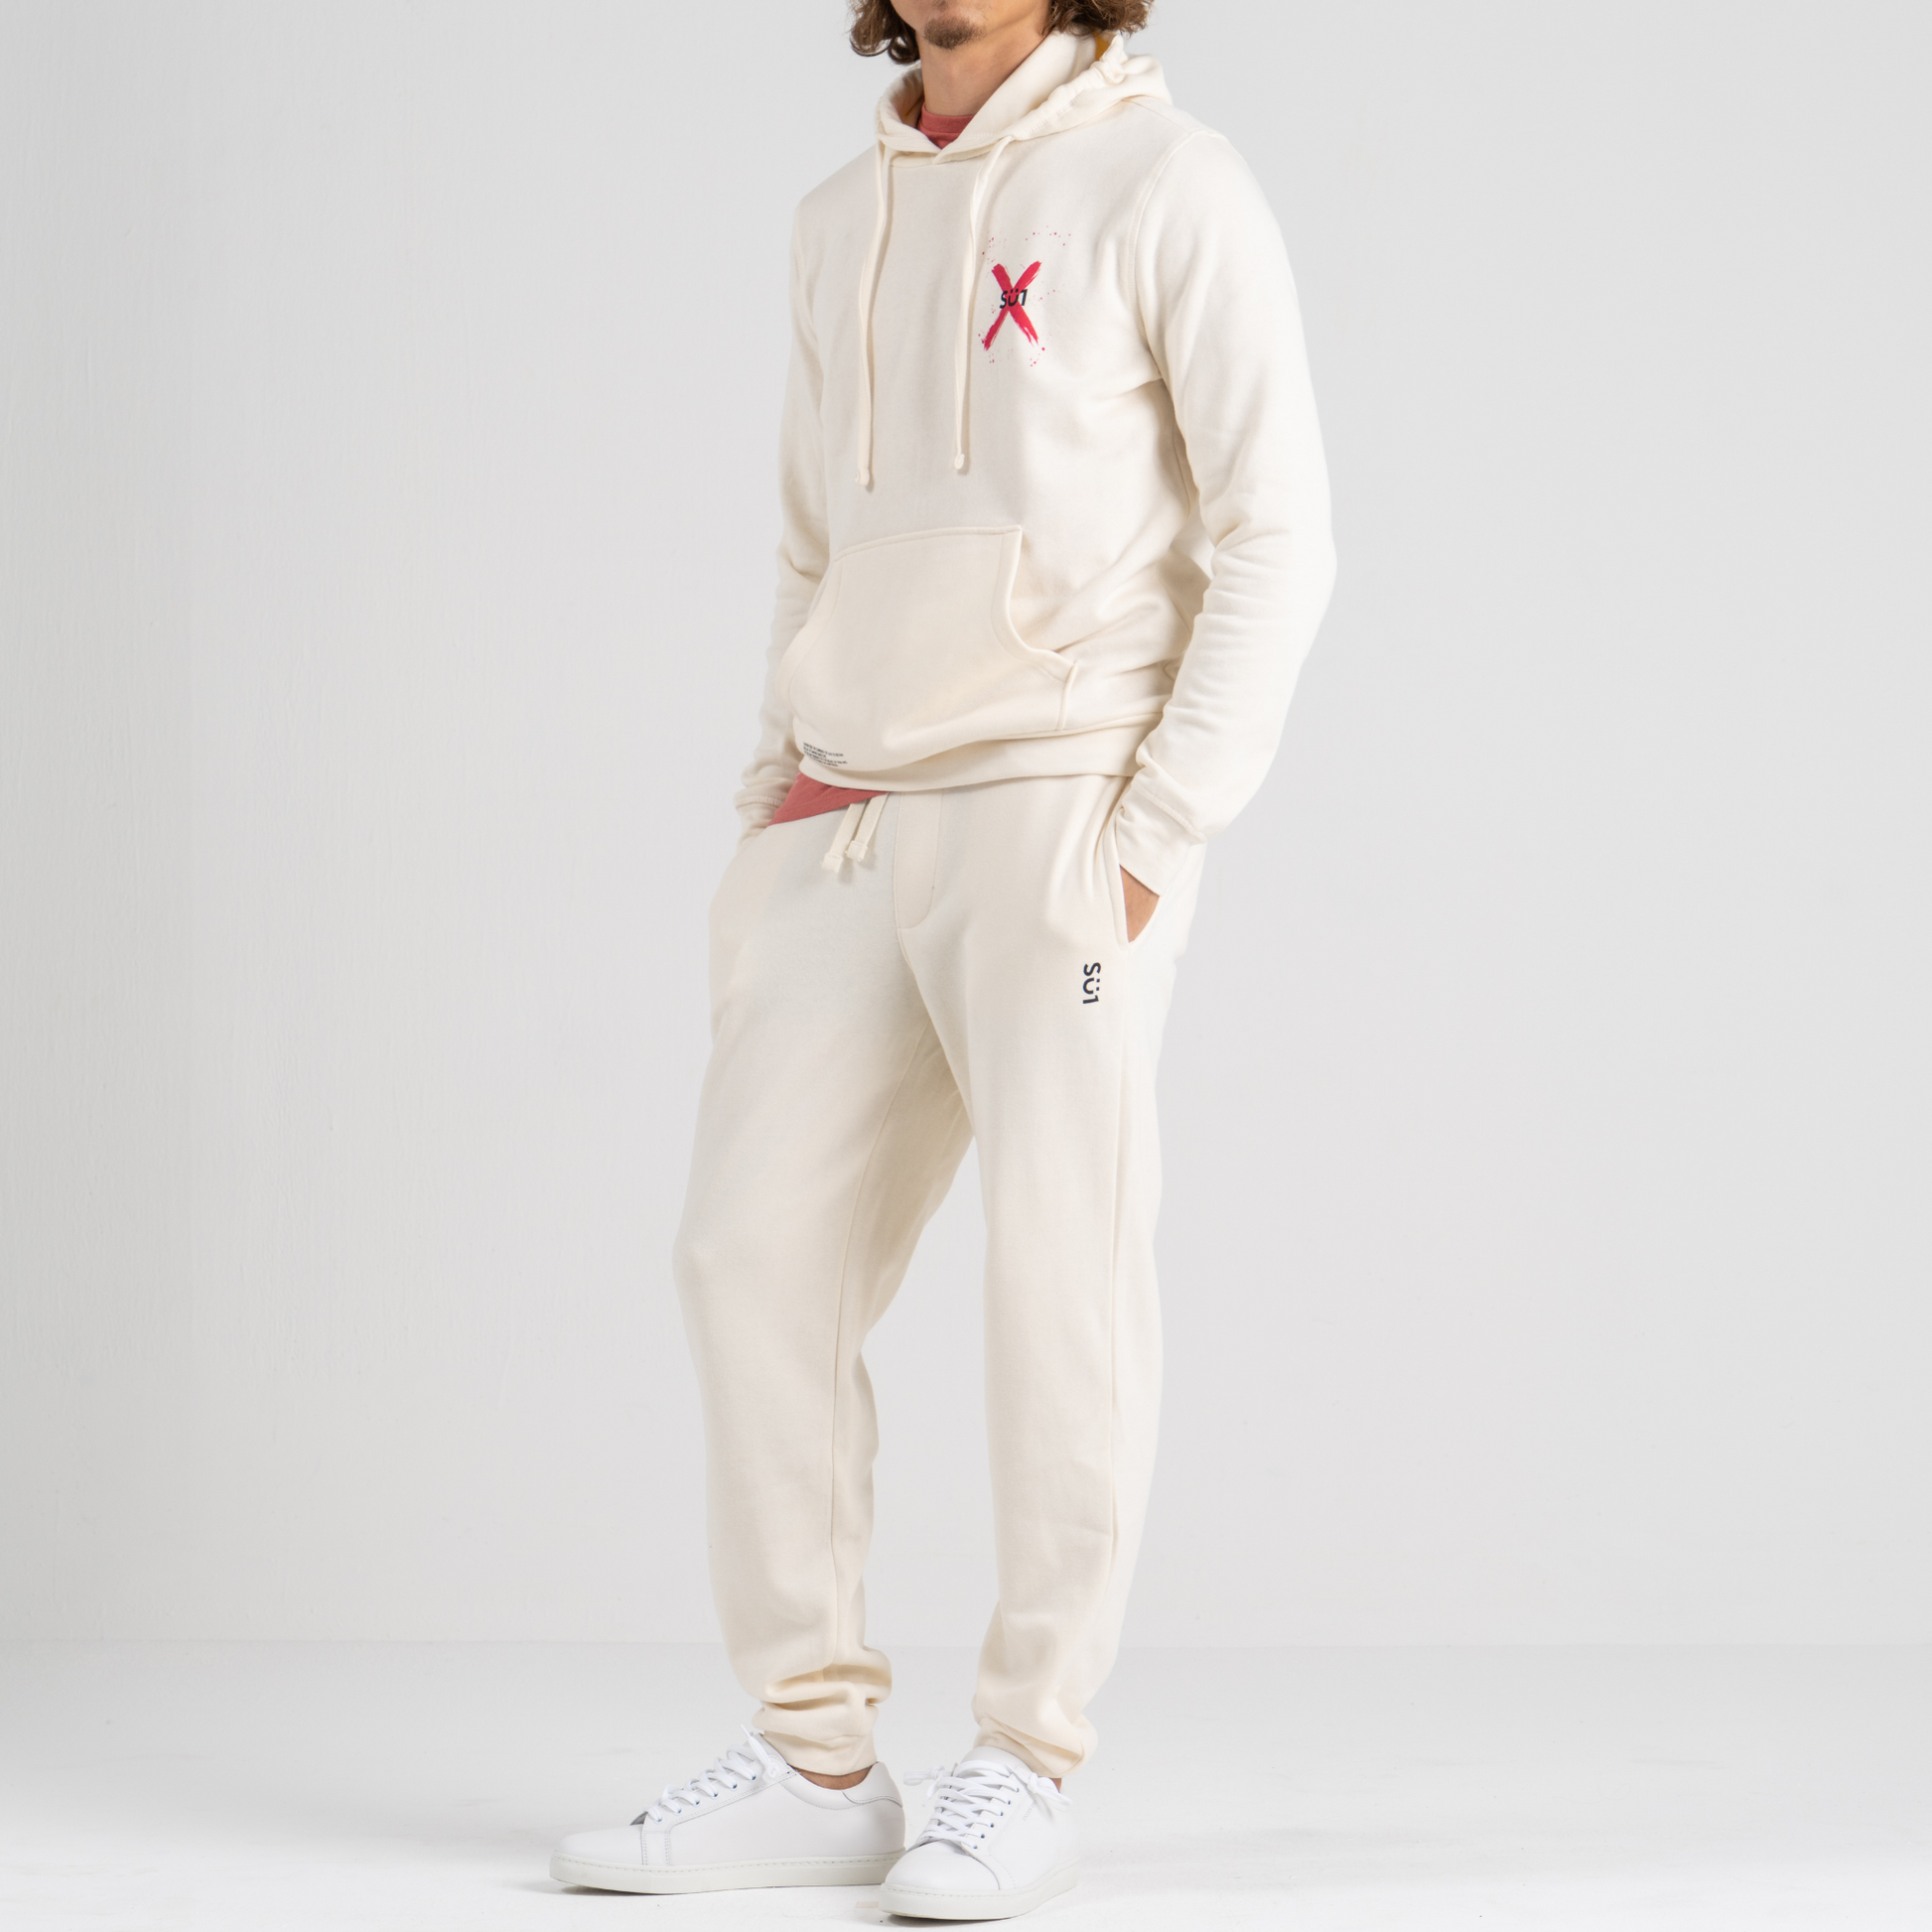 Man wearing ecru sport trousers SU1 clothing brand